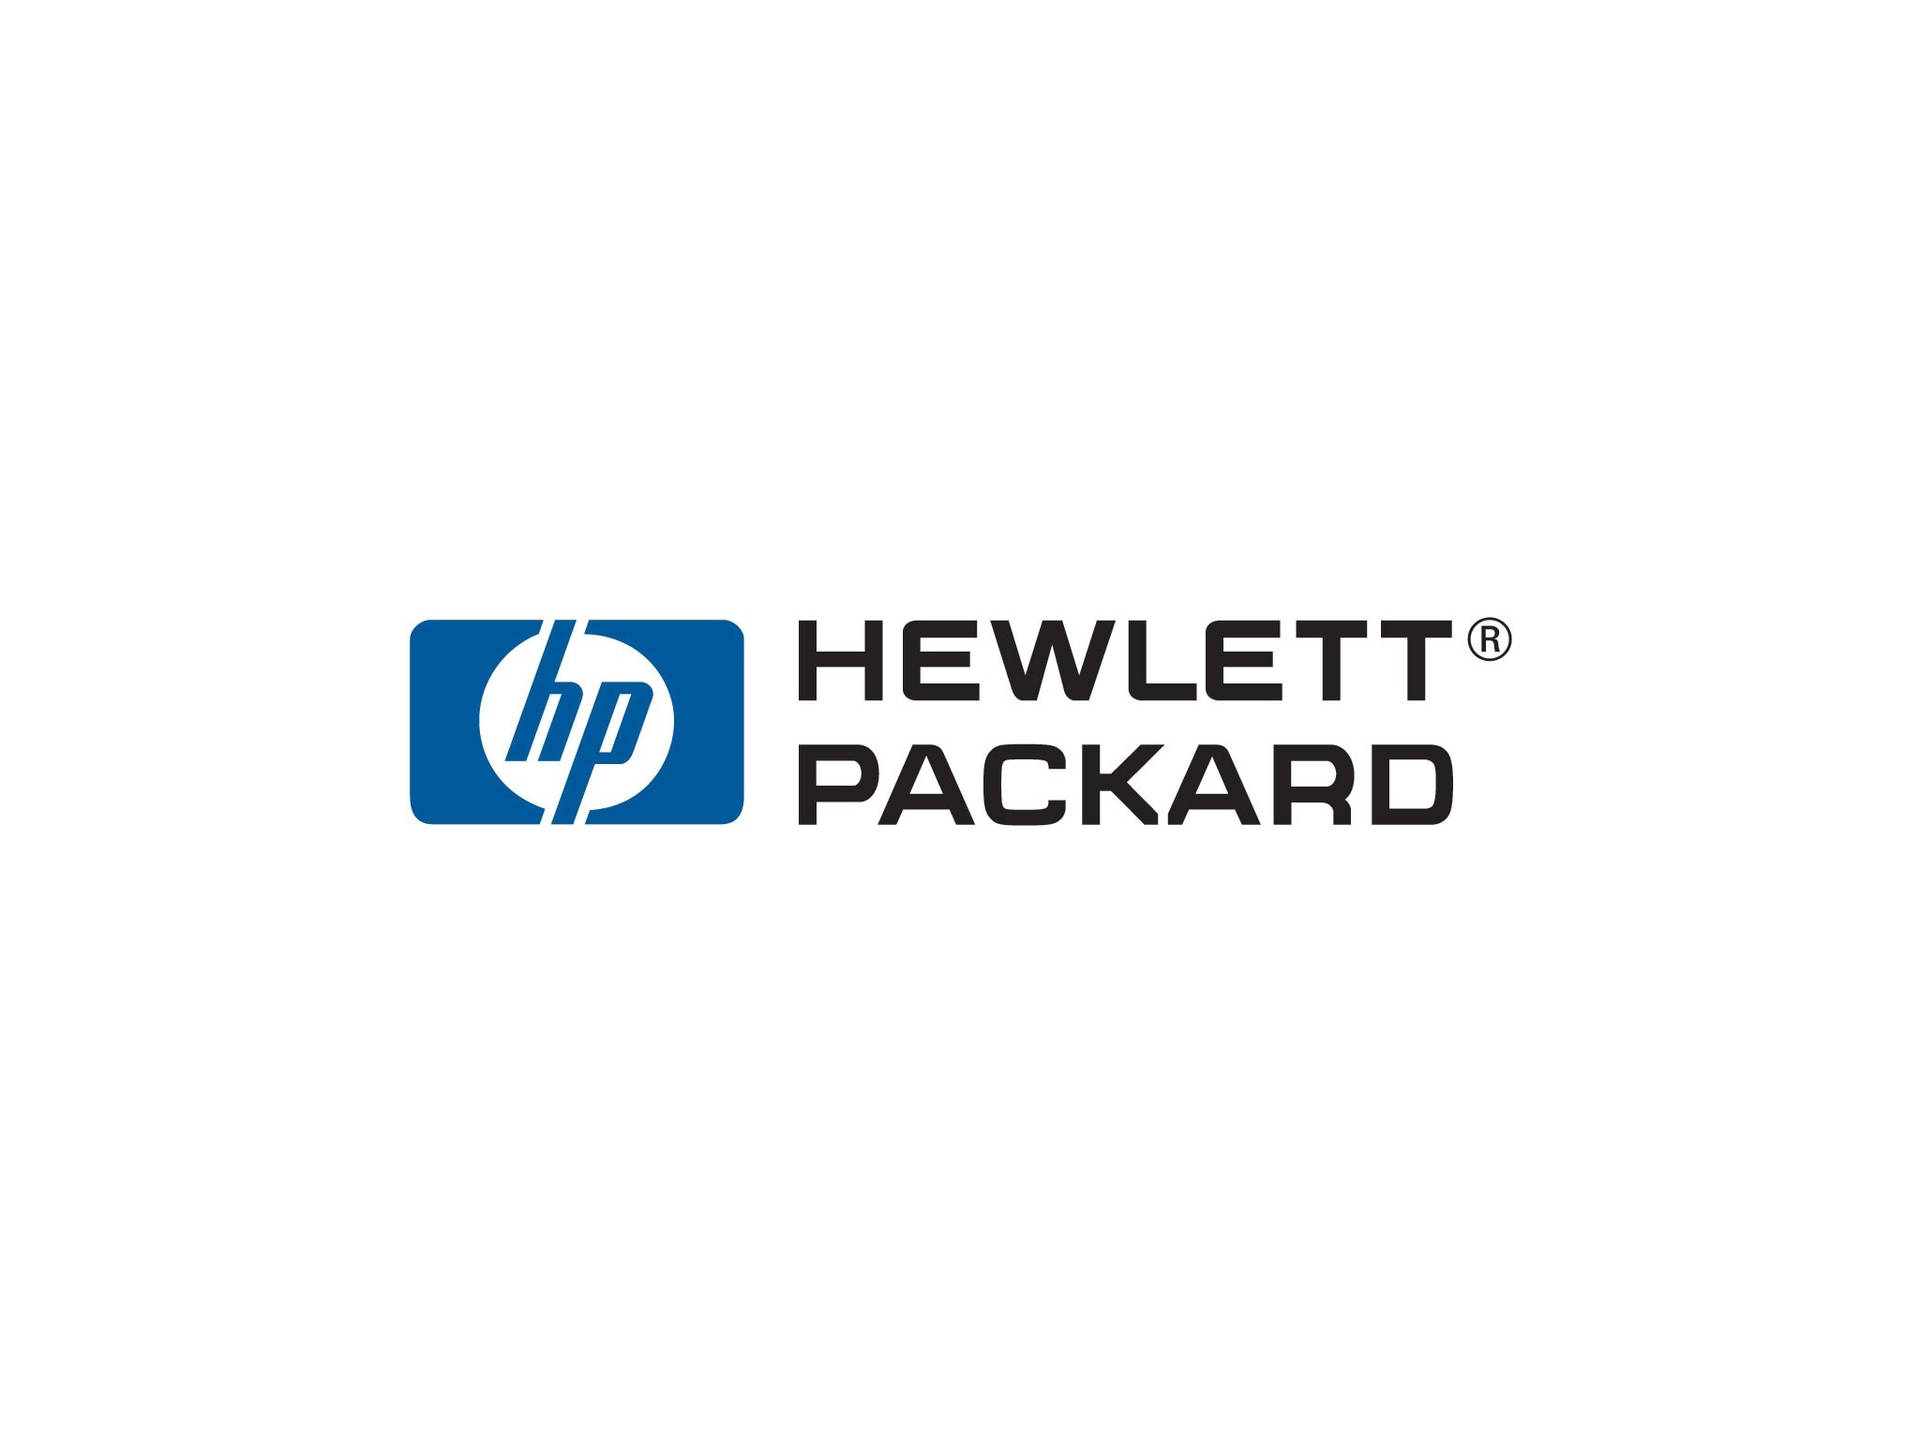 Hewlett-packard Hp Laptop Logo Background